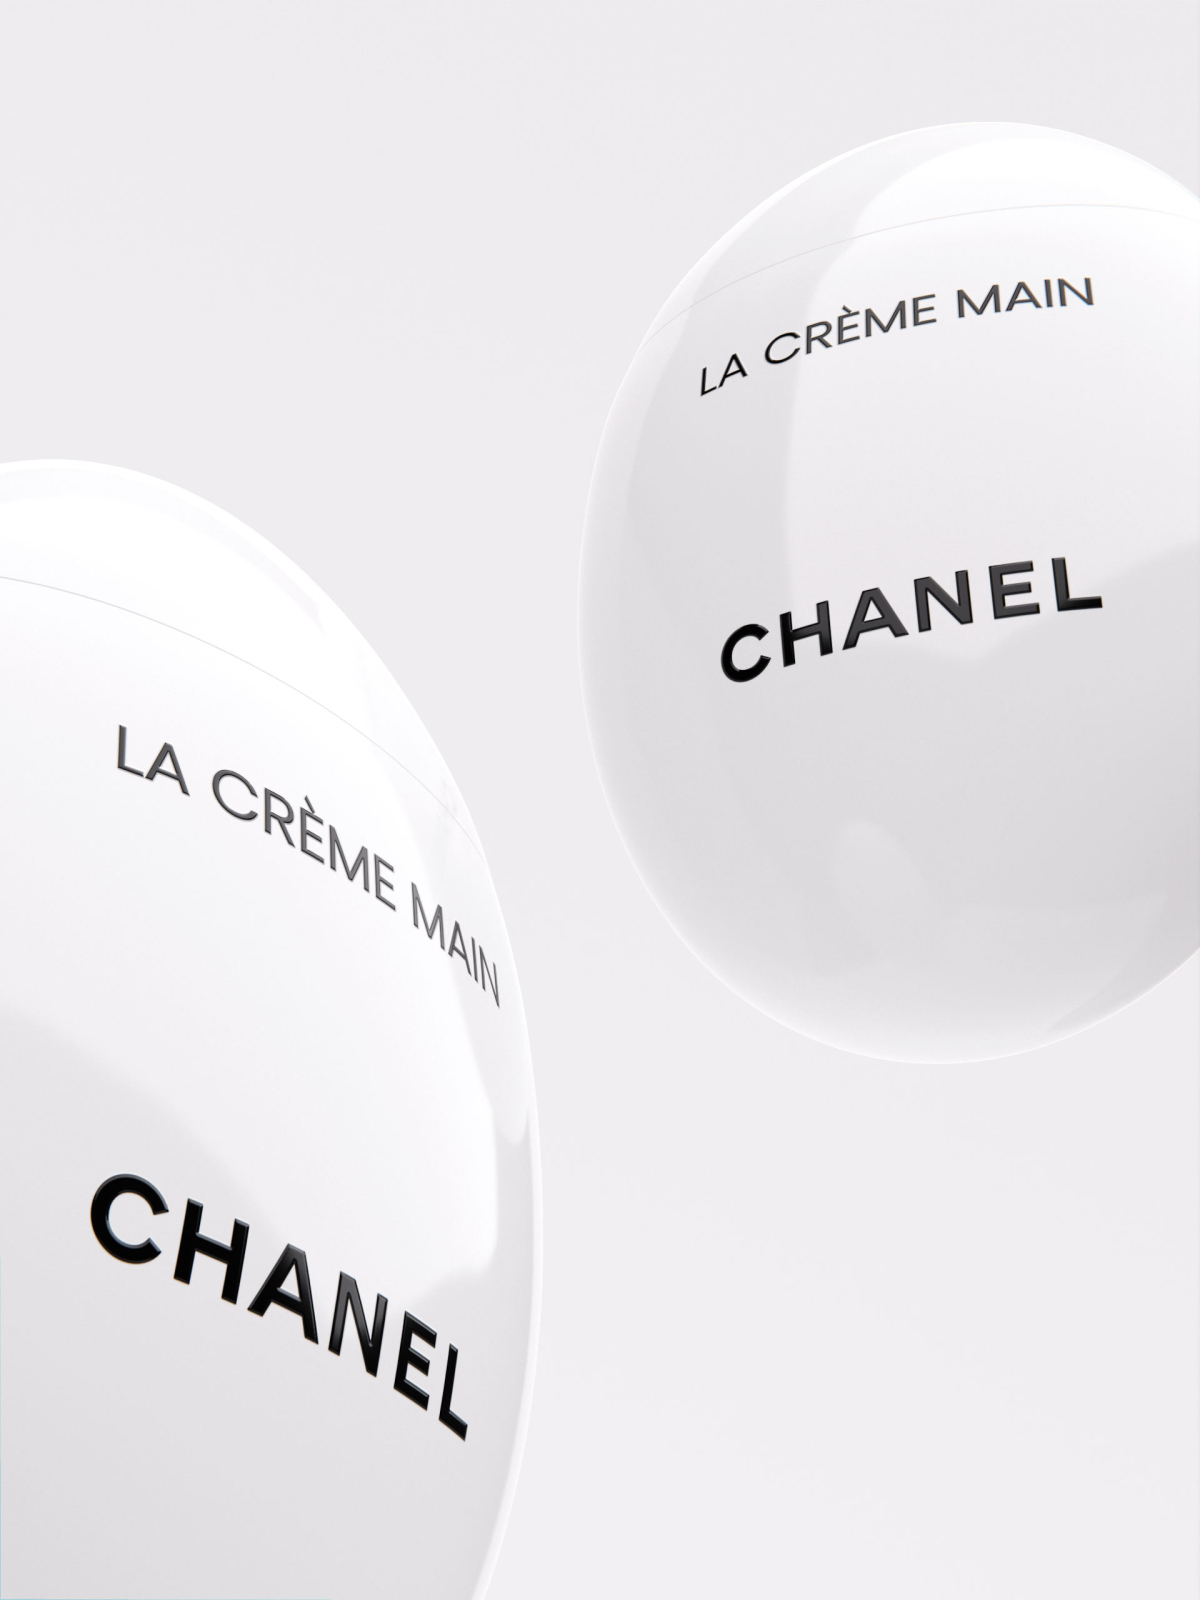 4 Chanel La Creme Main V2 1 - Chanel La Crème Main CGI - Sonny Nguyen